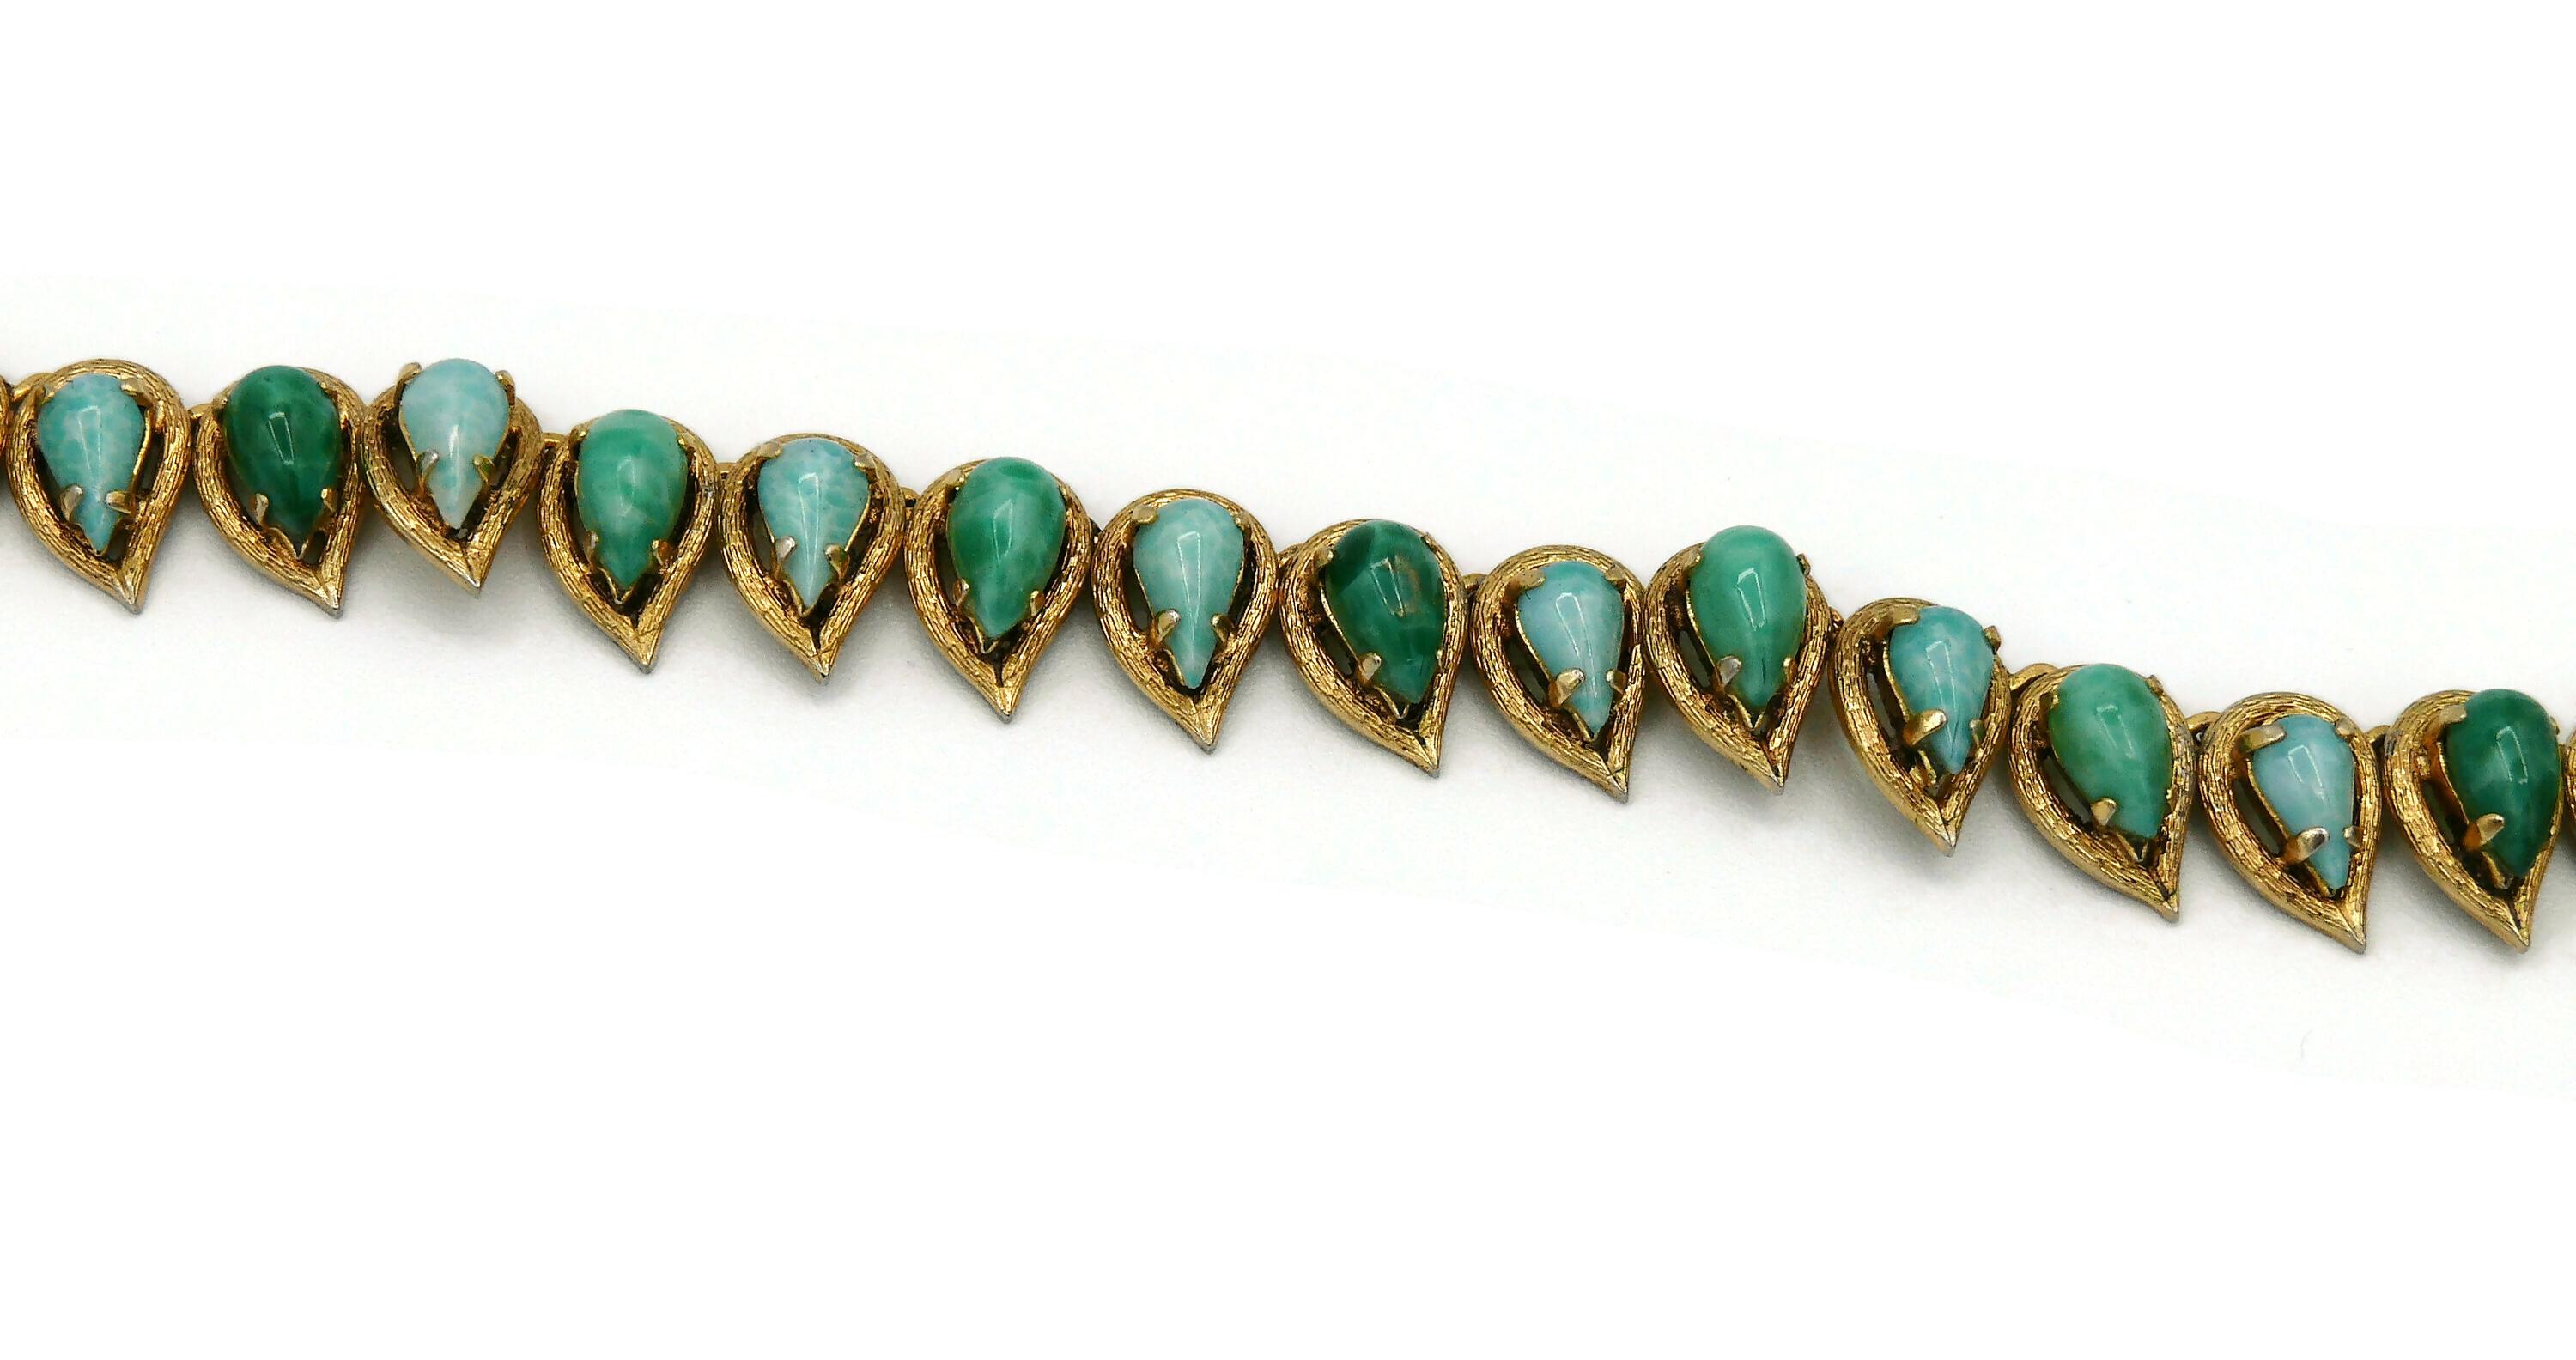 Christian Dior Vintage Faux Jade Stones Necklace 1965 For Sale 1